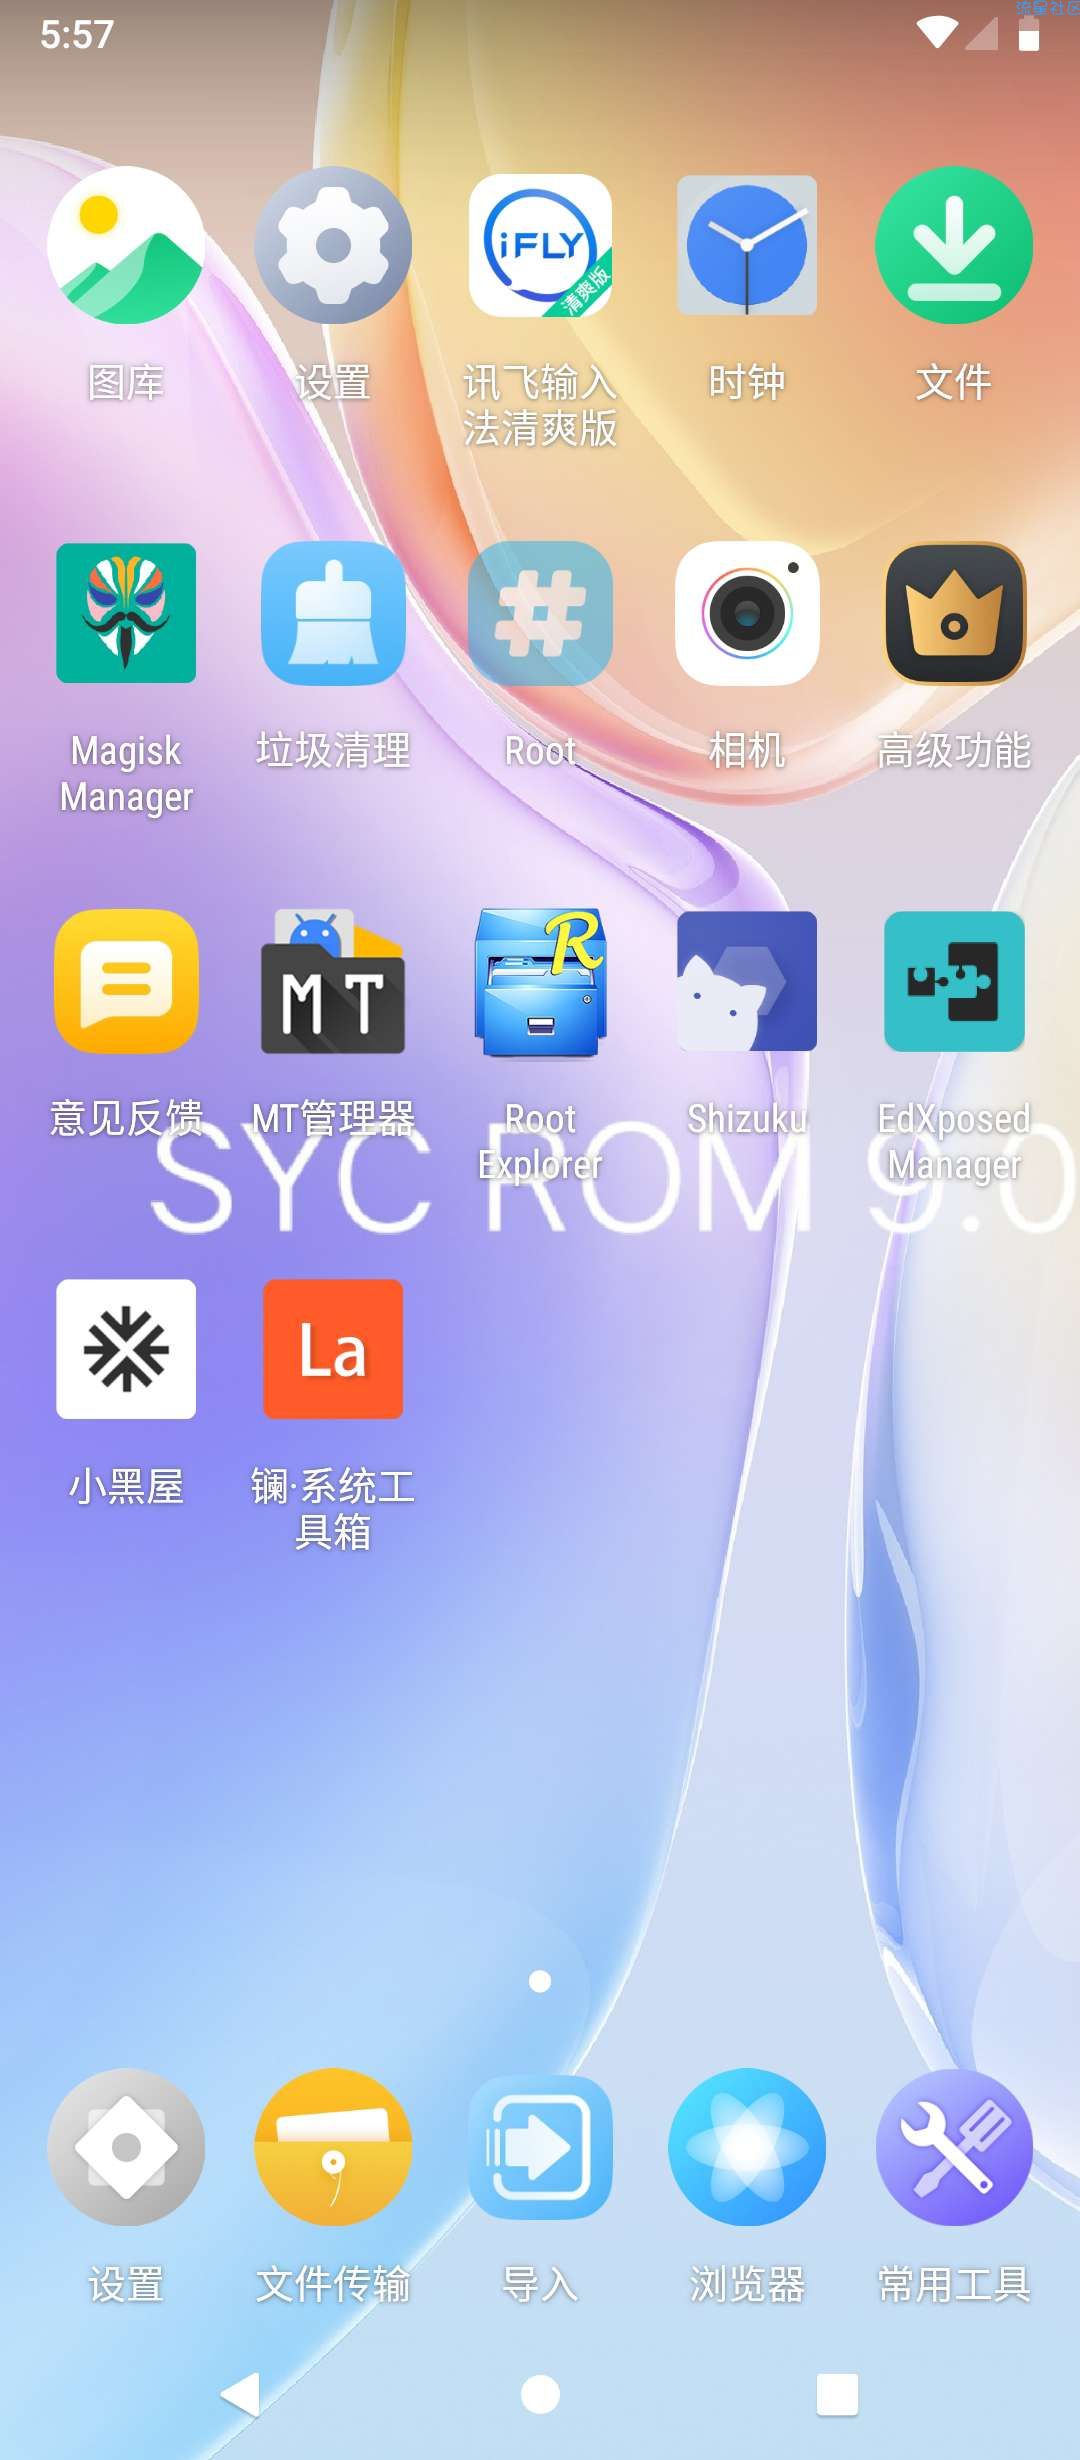 ROM-VMOS SYC 安卓9.0 内置面具等